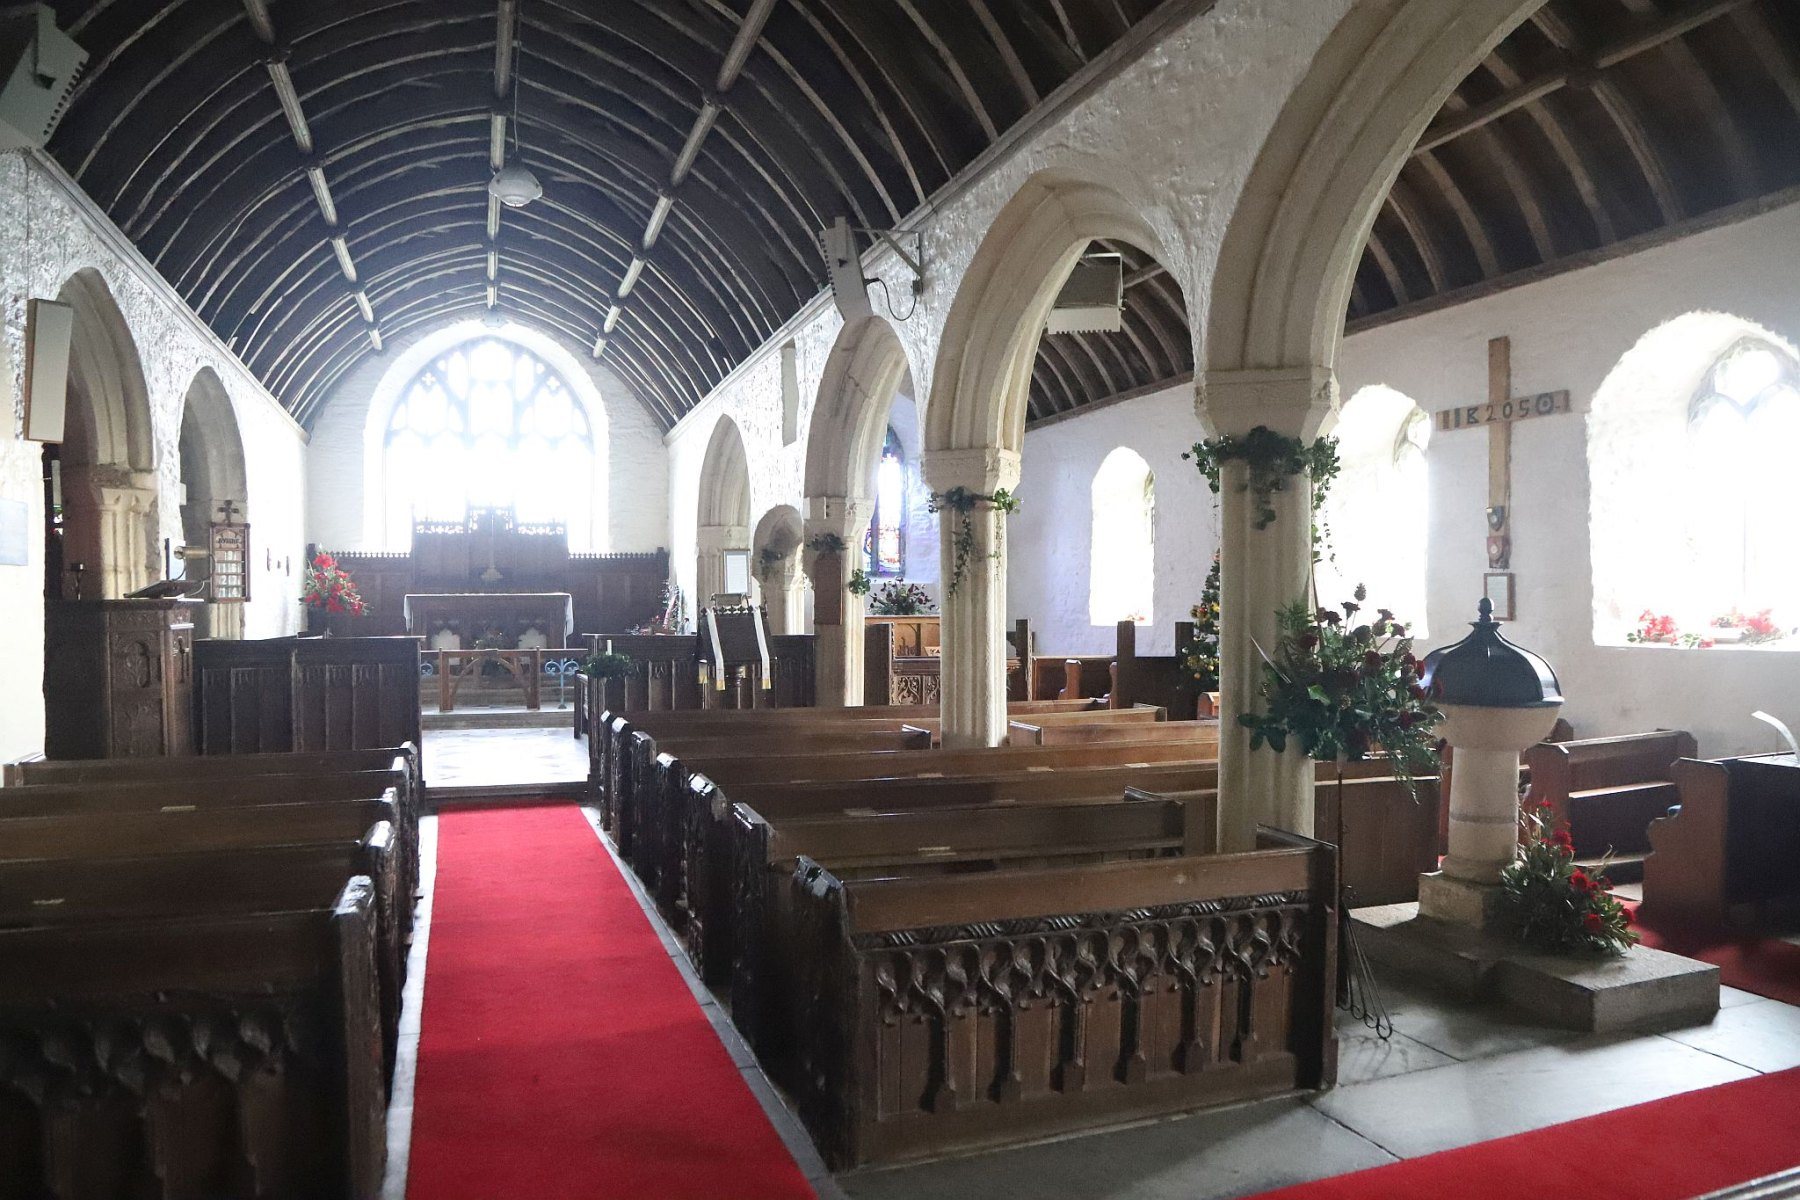 Northern aisle at St. Eval Parish Church near Newquay in Cornwall